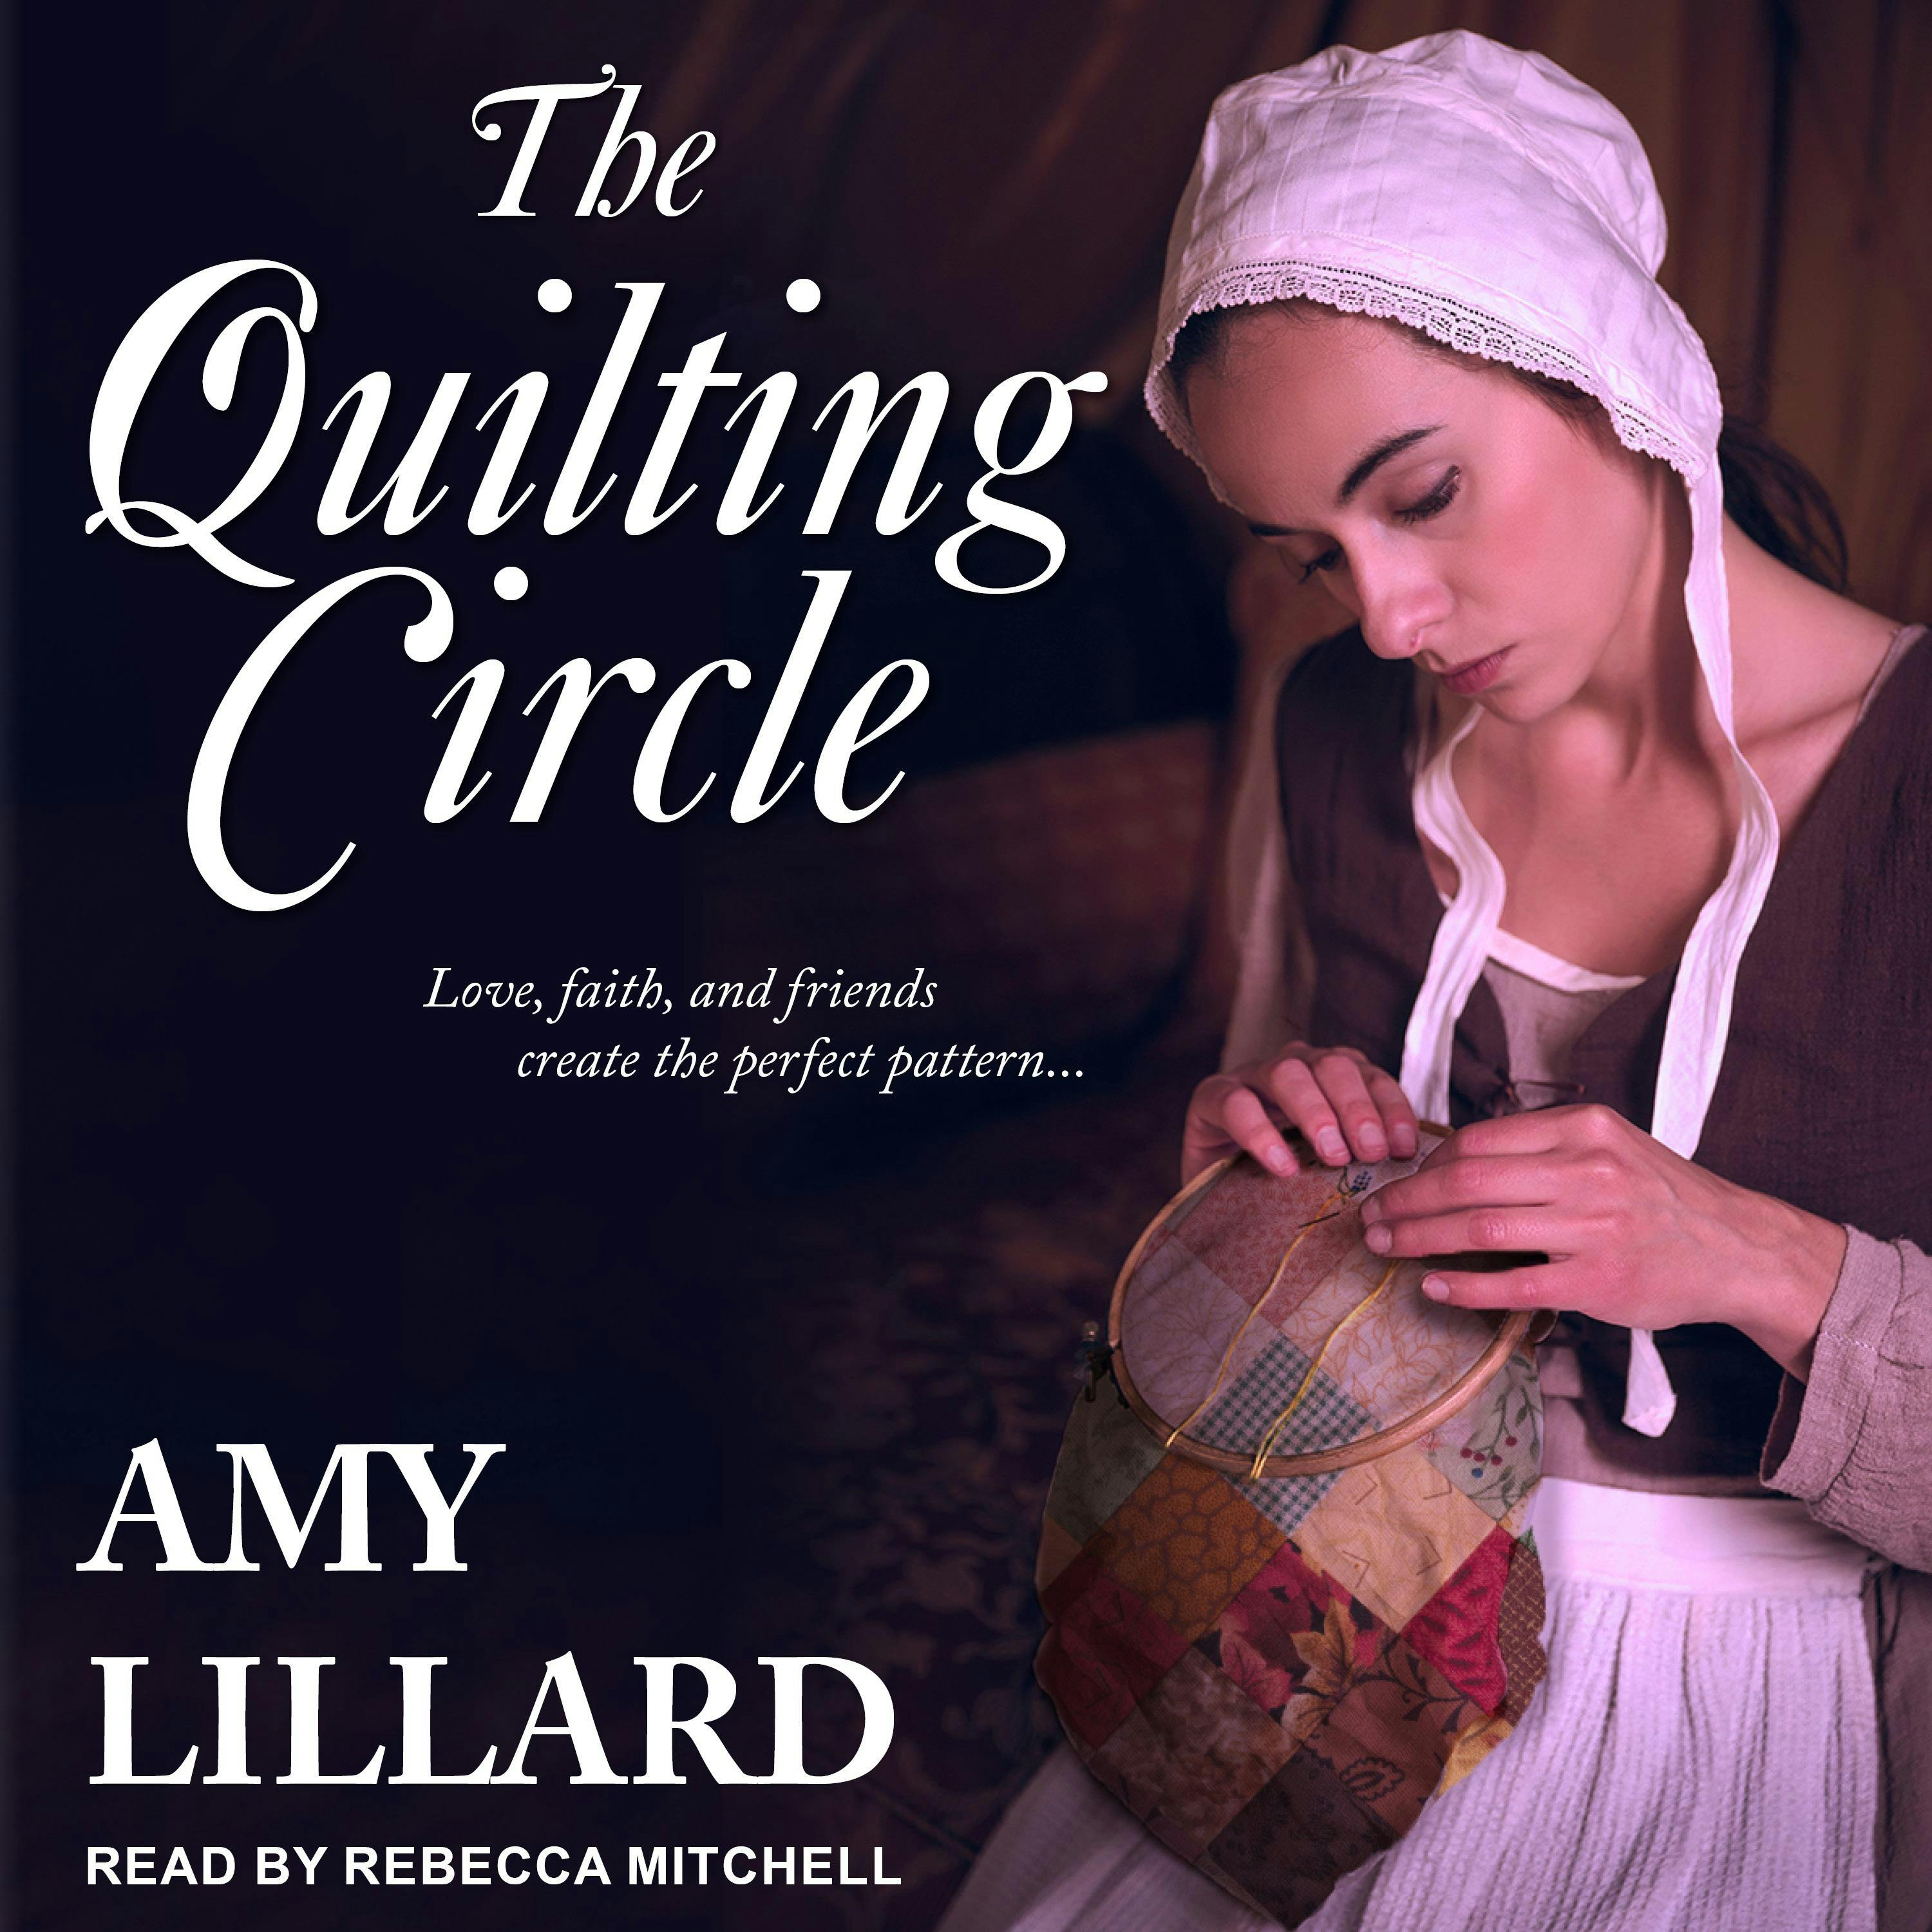 The Quilting Circle - Amy Lillard